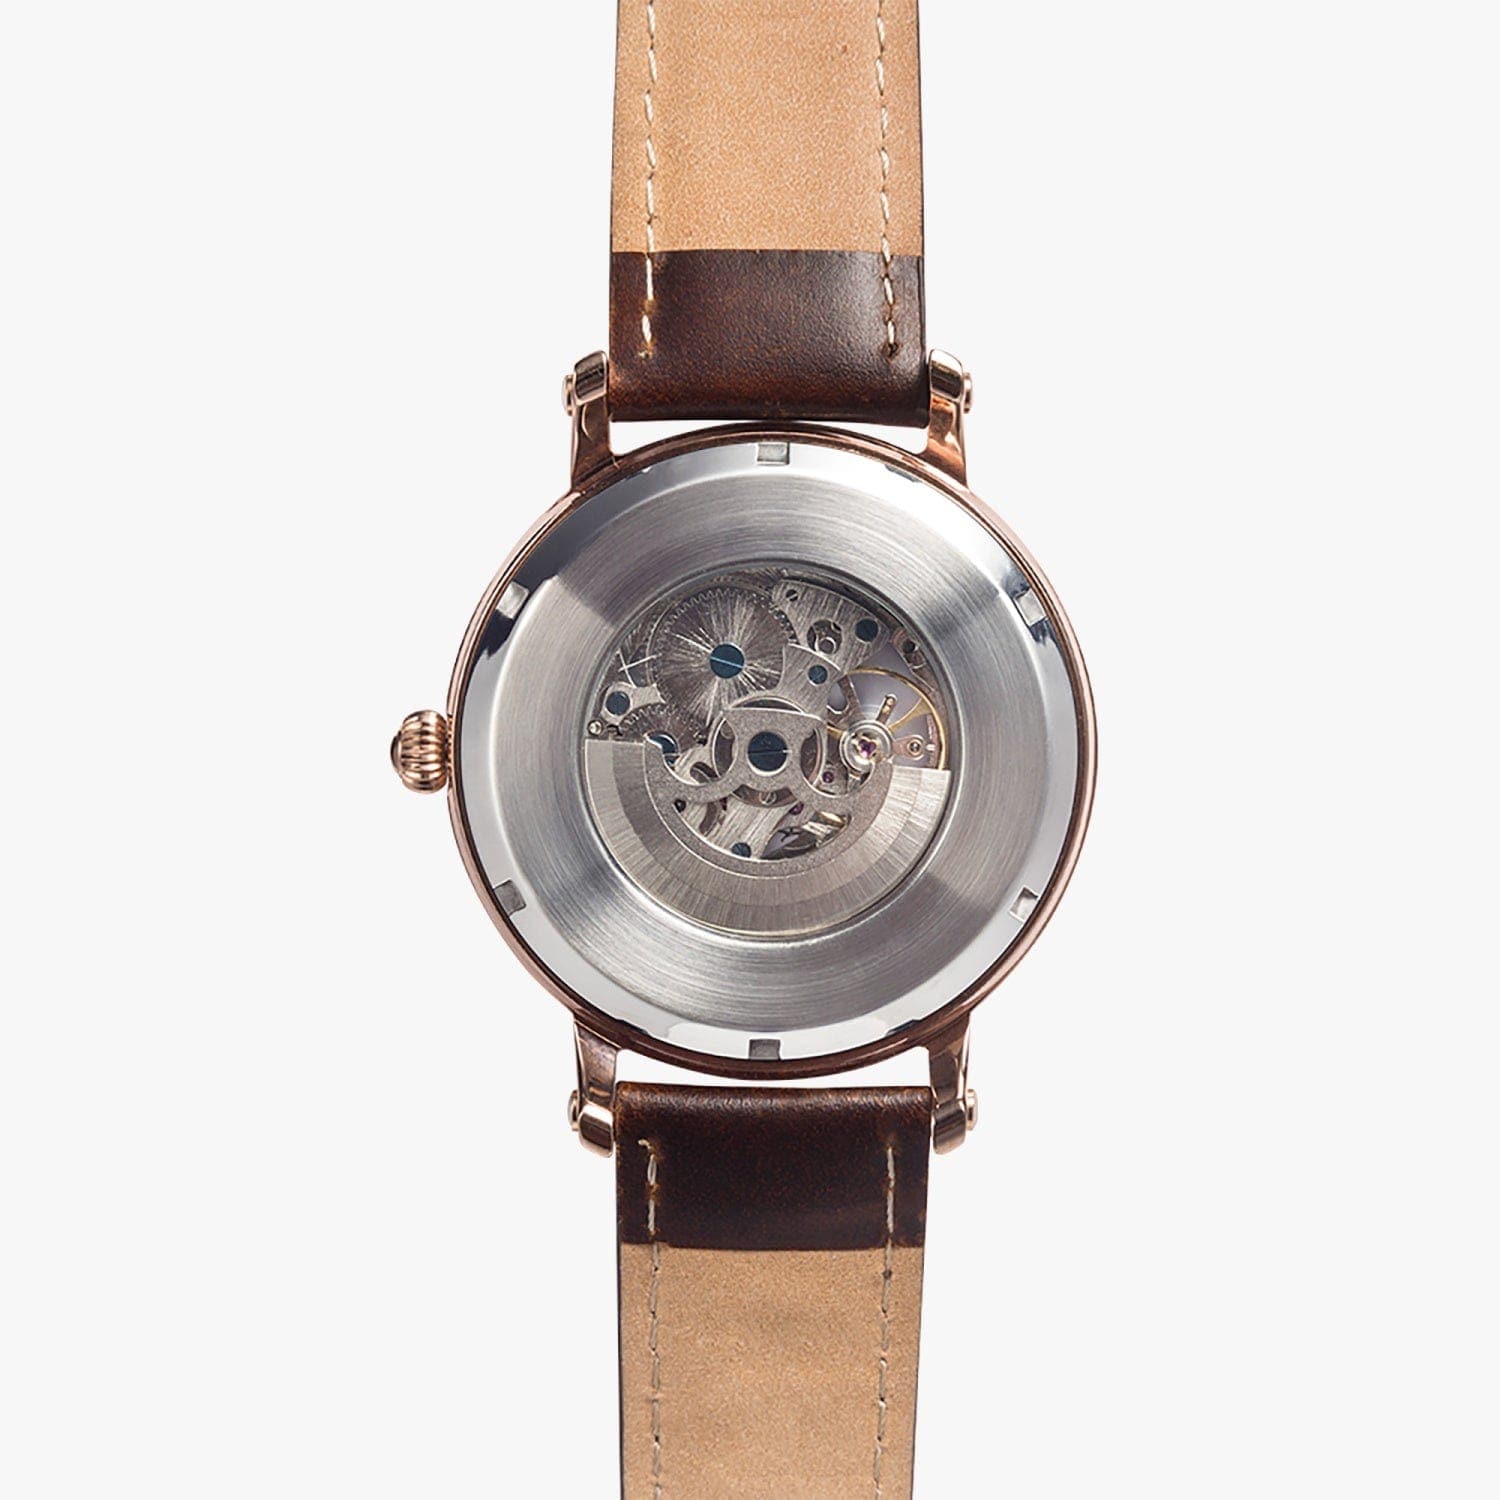 Shy white rose, designer 46mm Unisex Automatic Watch (Rose Gold), designed by Sensus Studio